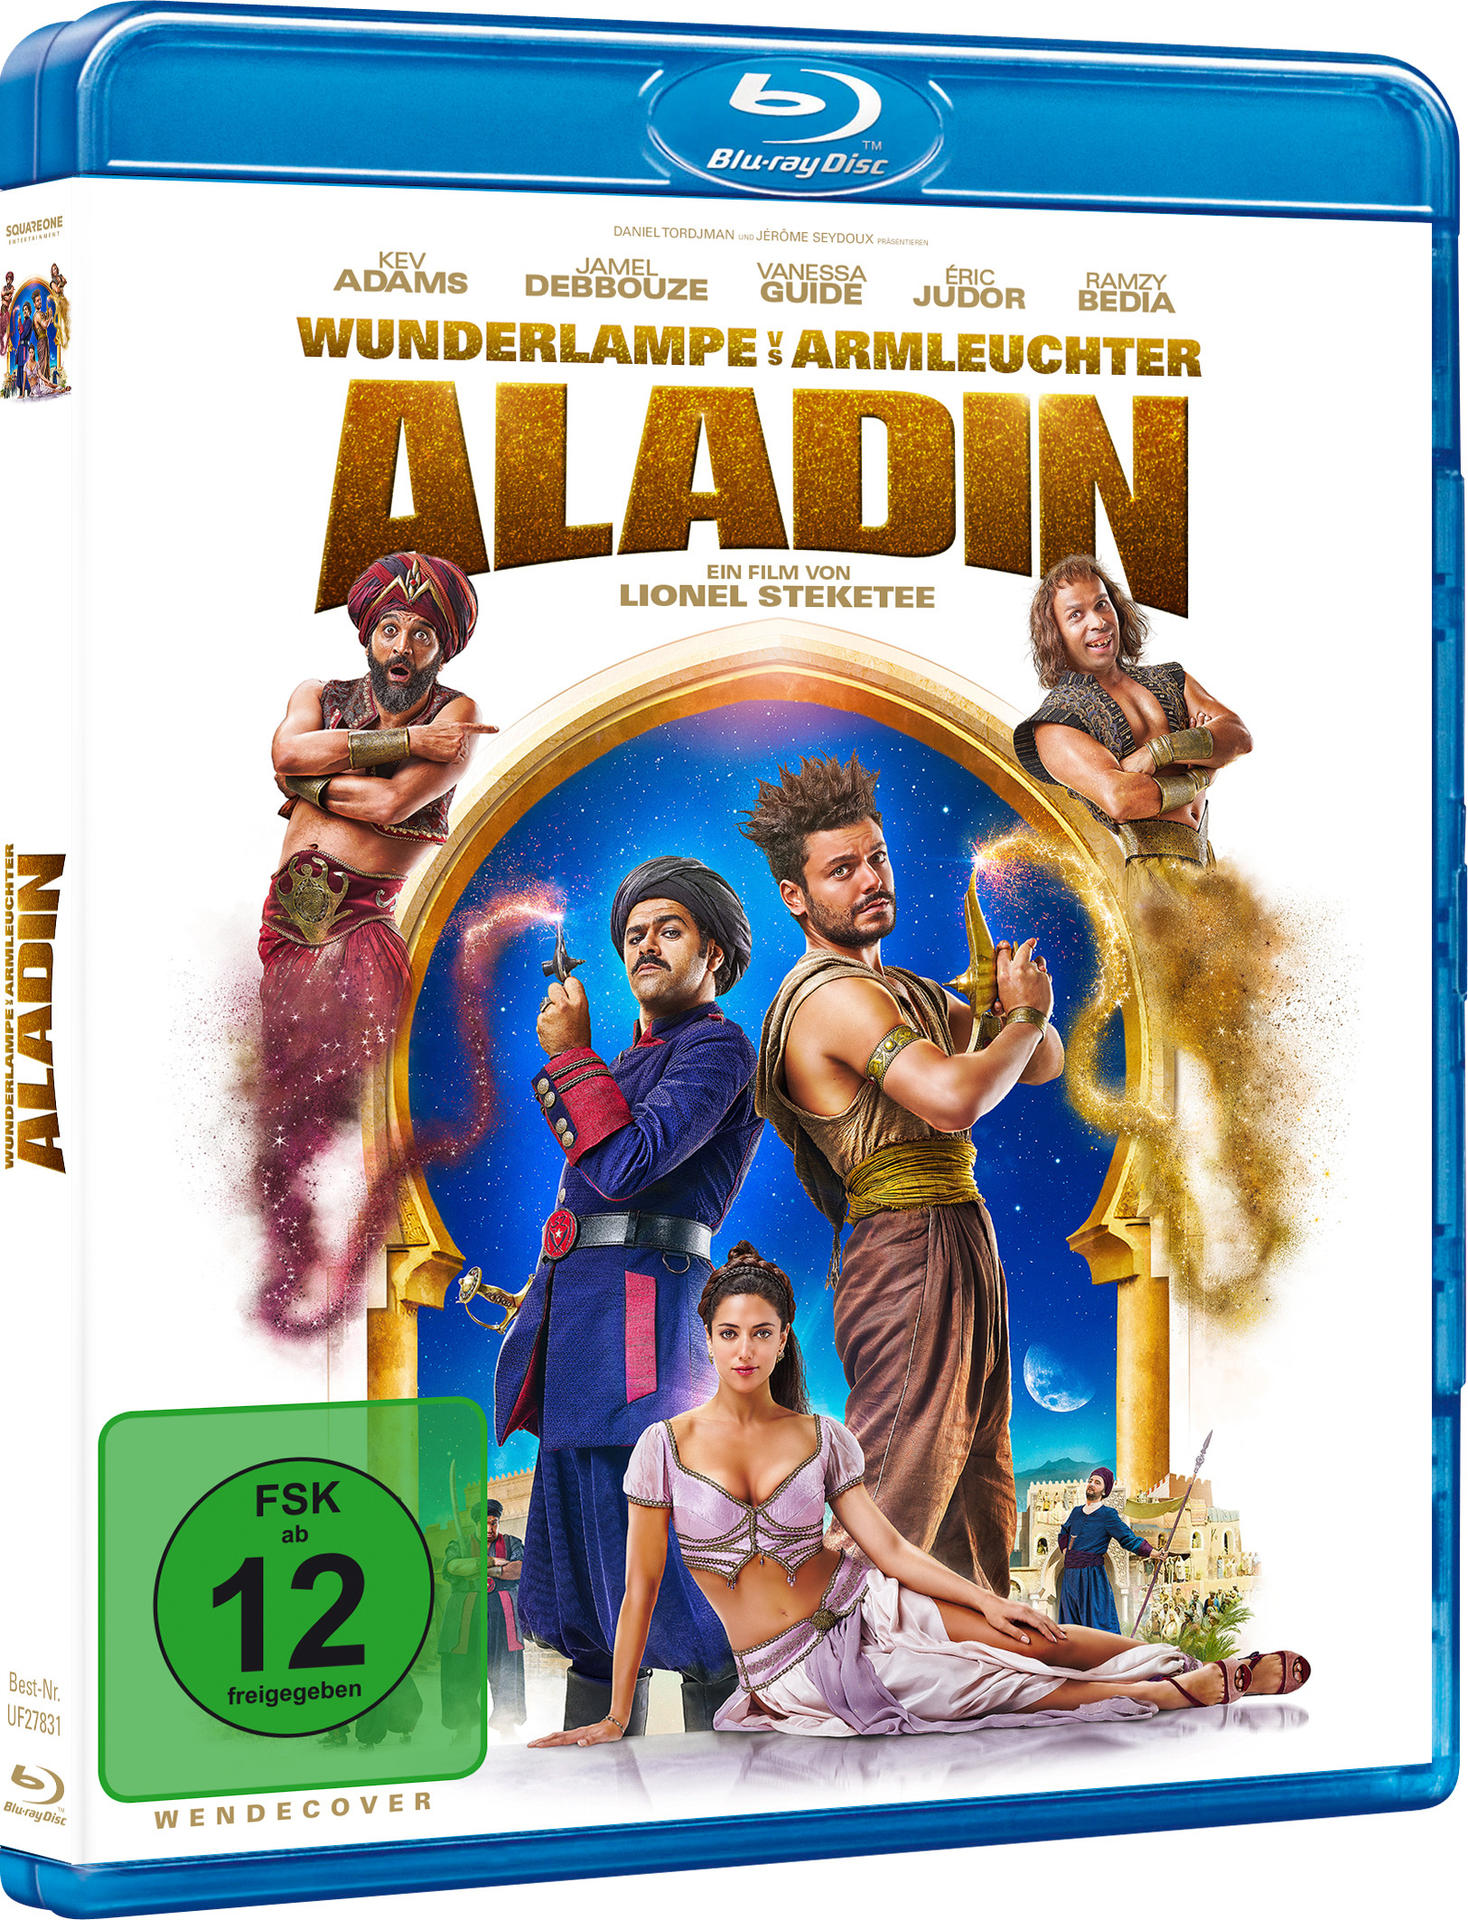 Wunderlampe Aladin Blu-ray Armleuchter vs. -